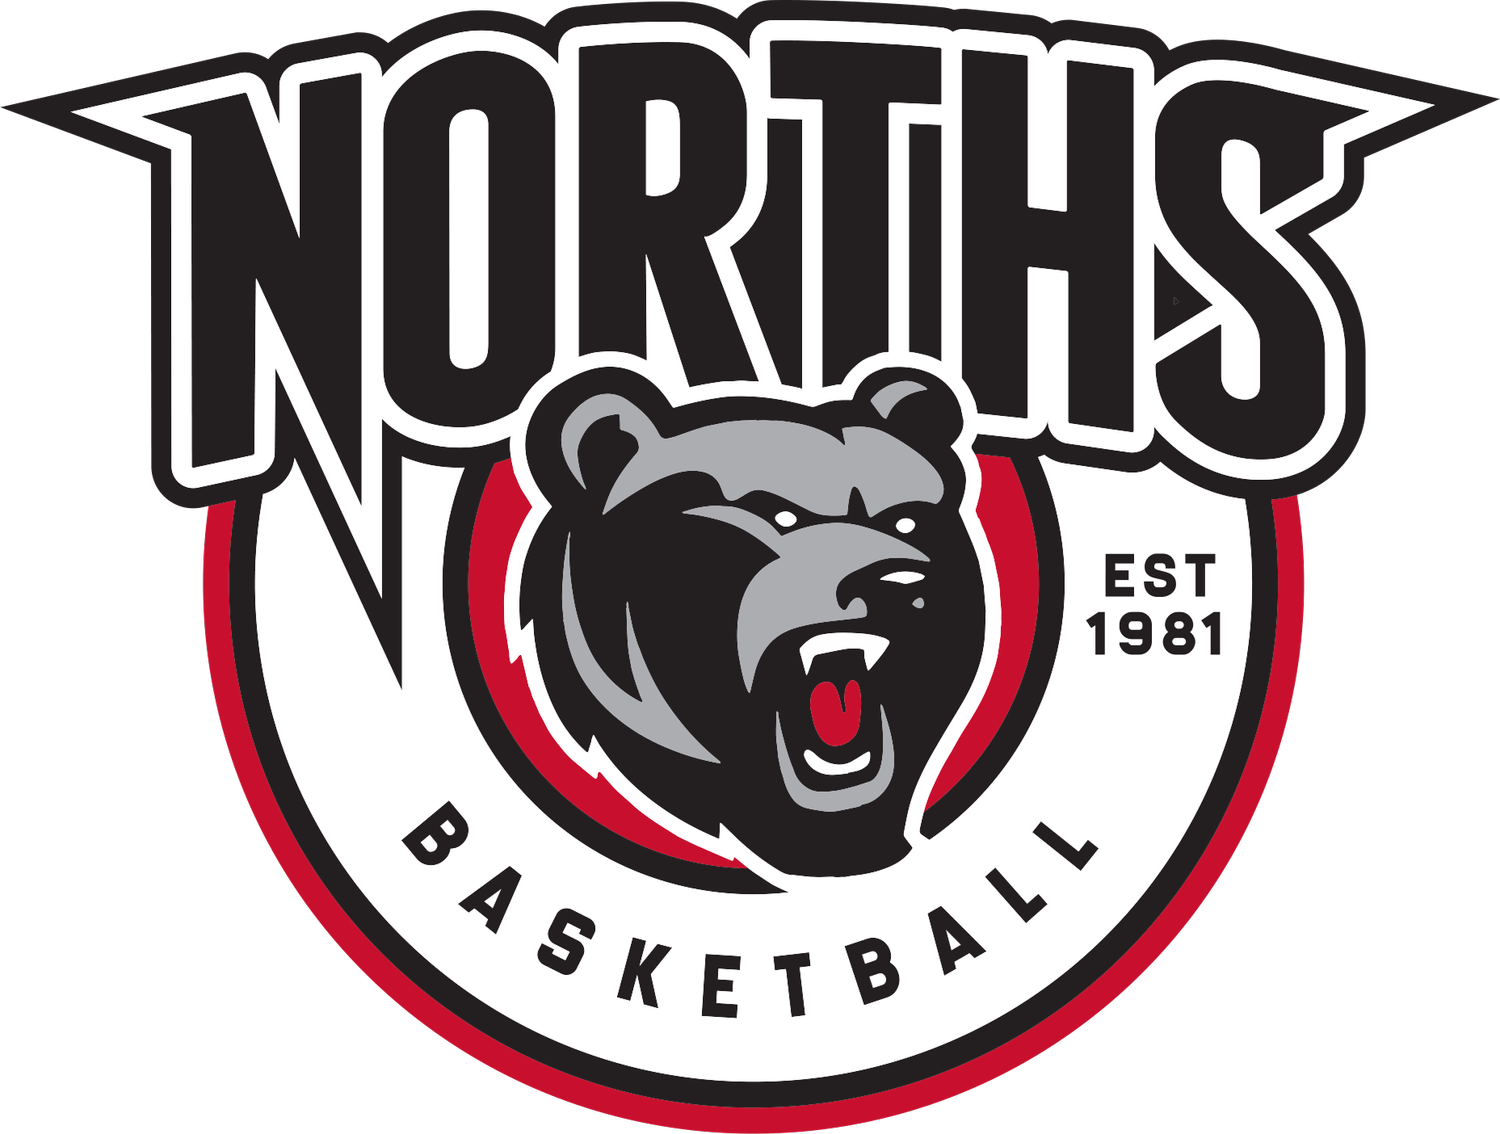 Northern Suburbs Basketball Association